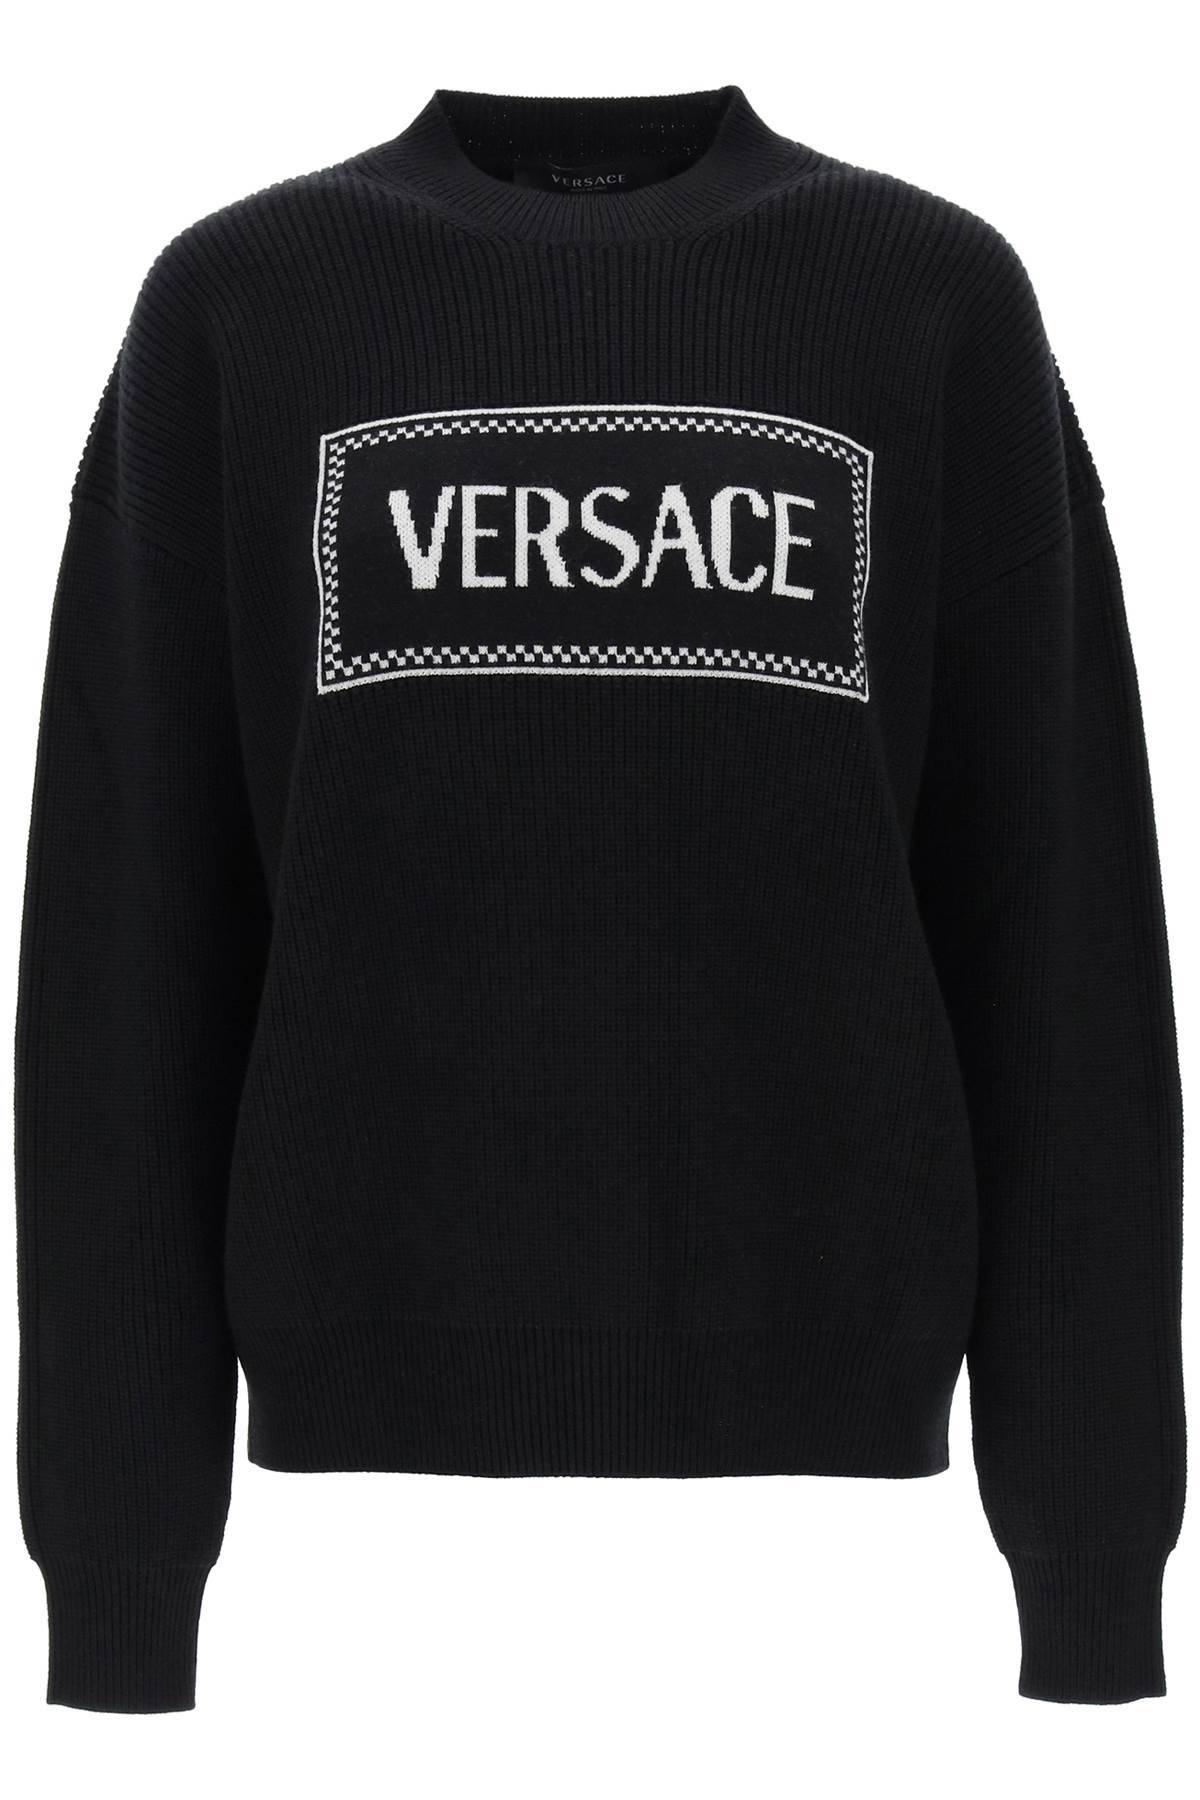 Versace VERSACE crew-neck sweater with logo inlay